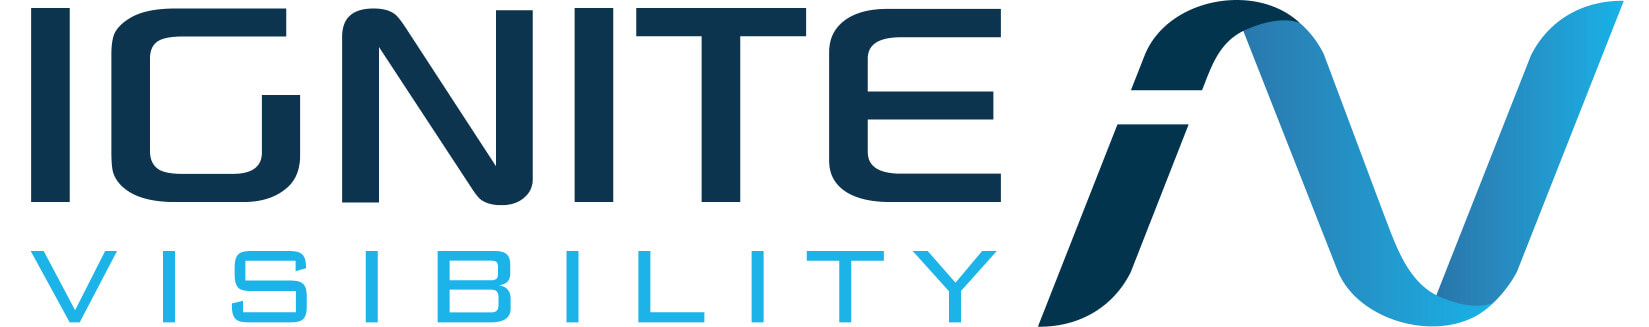  Best SEO Agency Logo: Ignite Visibility